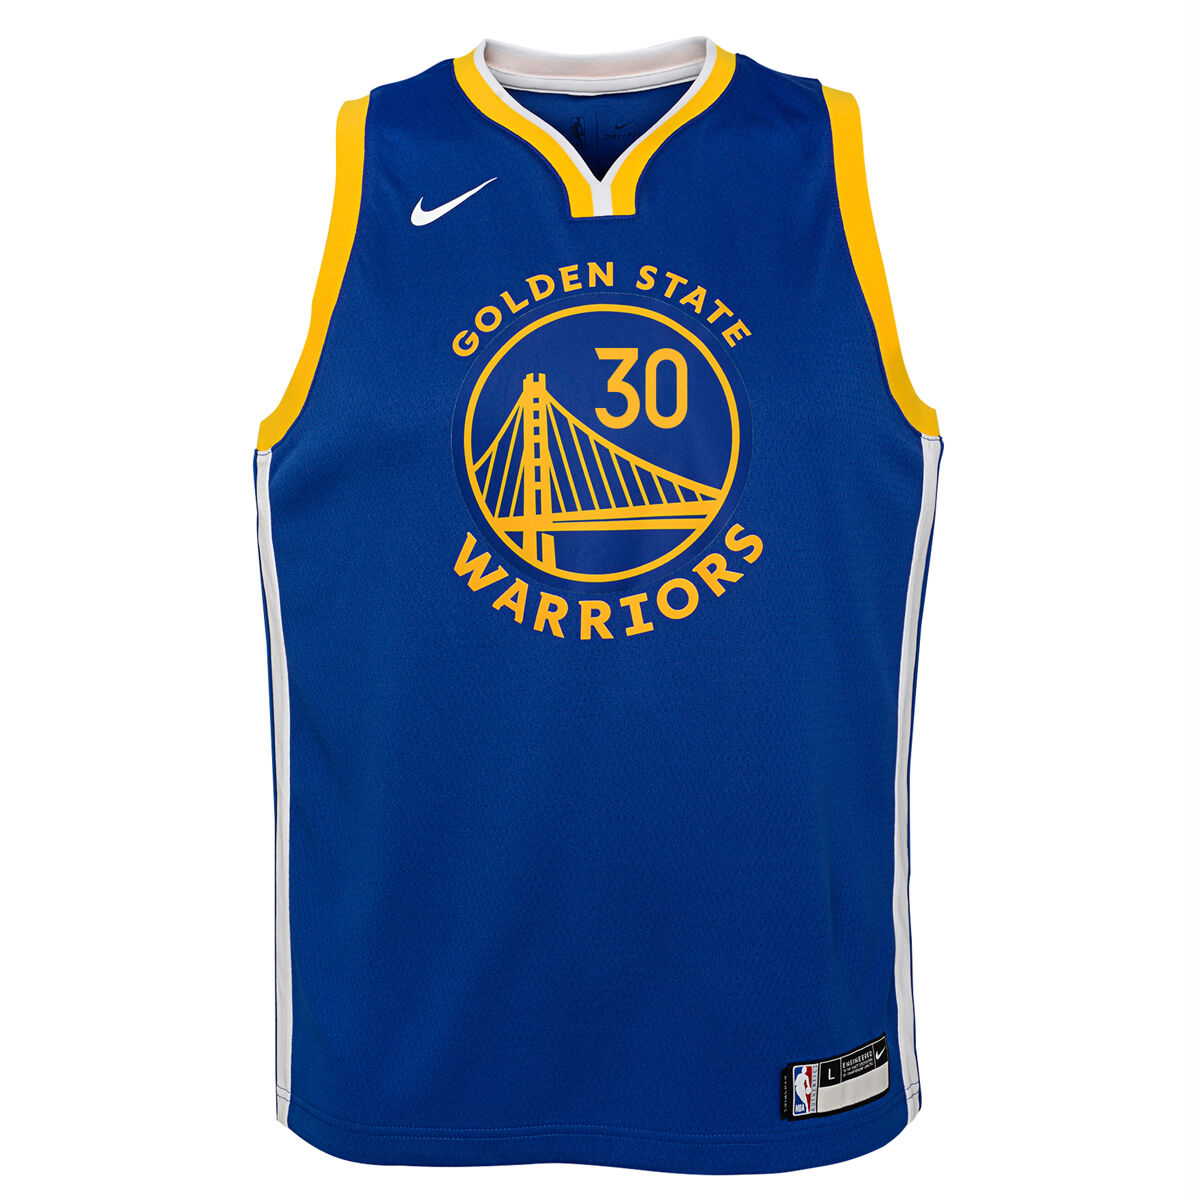 NBA_ Golden''State''Warriors''Men Basketball Jersey 30 33 11 Champagne  Stephen Curry James Wiseman Klay Thompson 667 